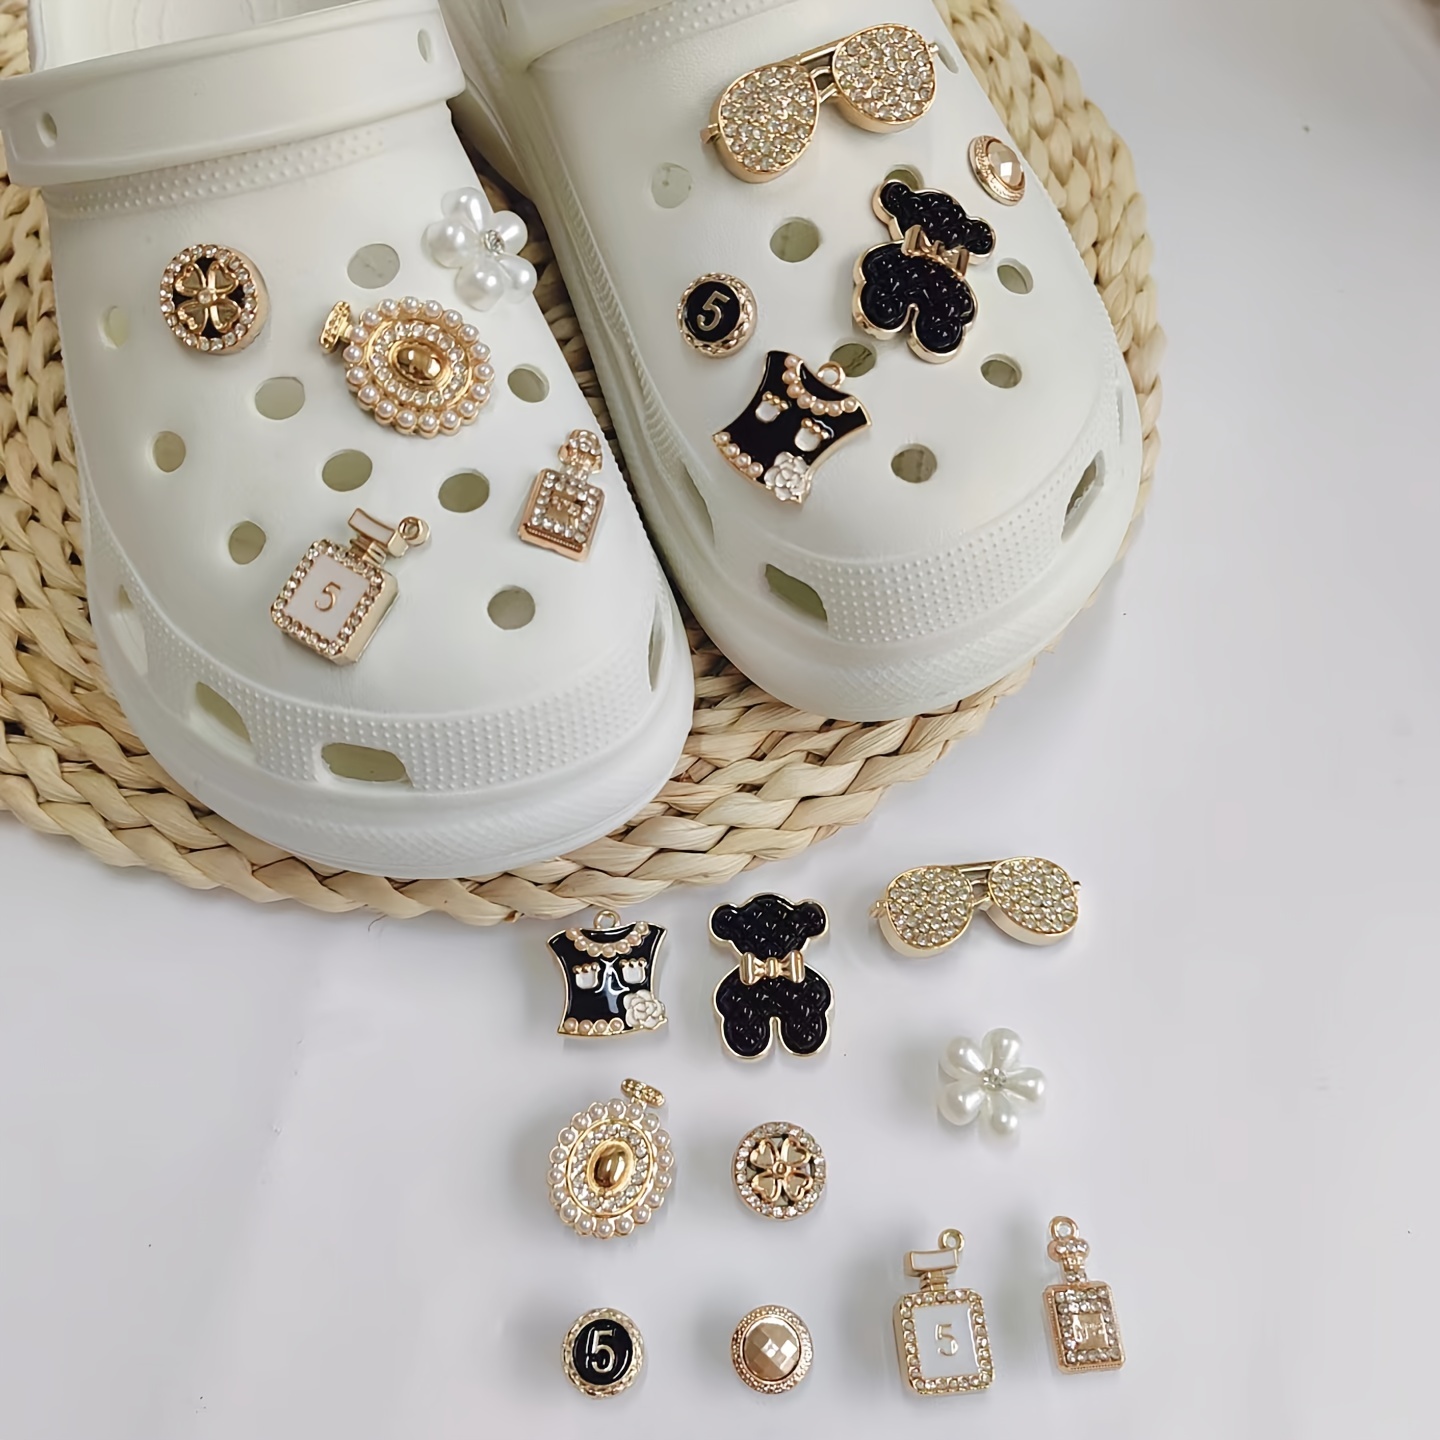 DIMUGE 2 Pcs Mini Crocs Style Shoe Charms for Croc, Shoe Decoration Charms, Cute Croc Charms Good for Girls and Kids